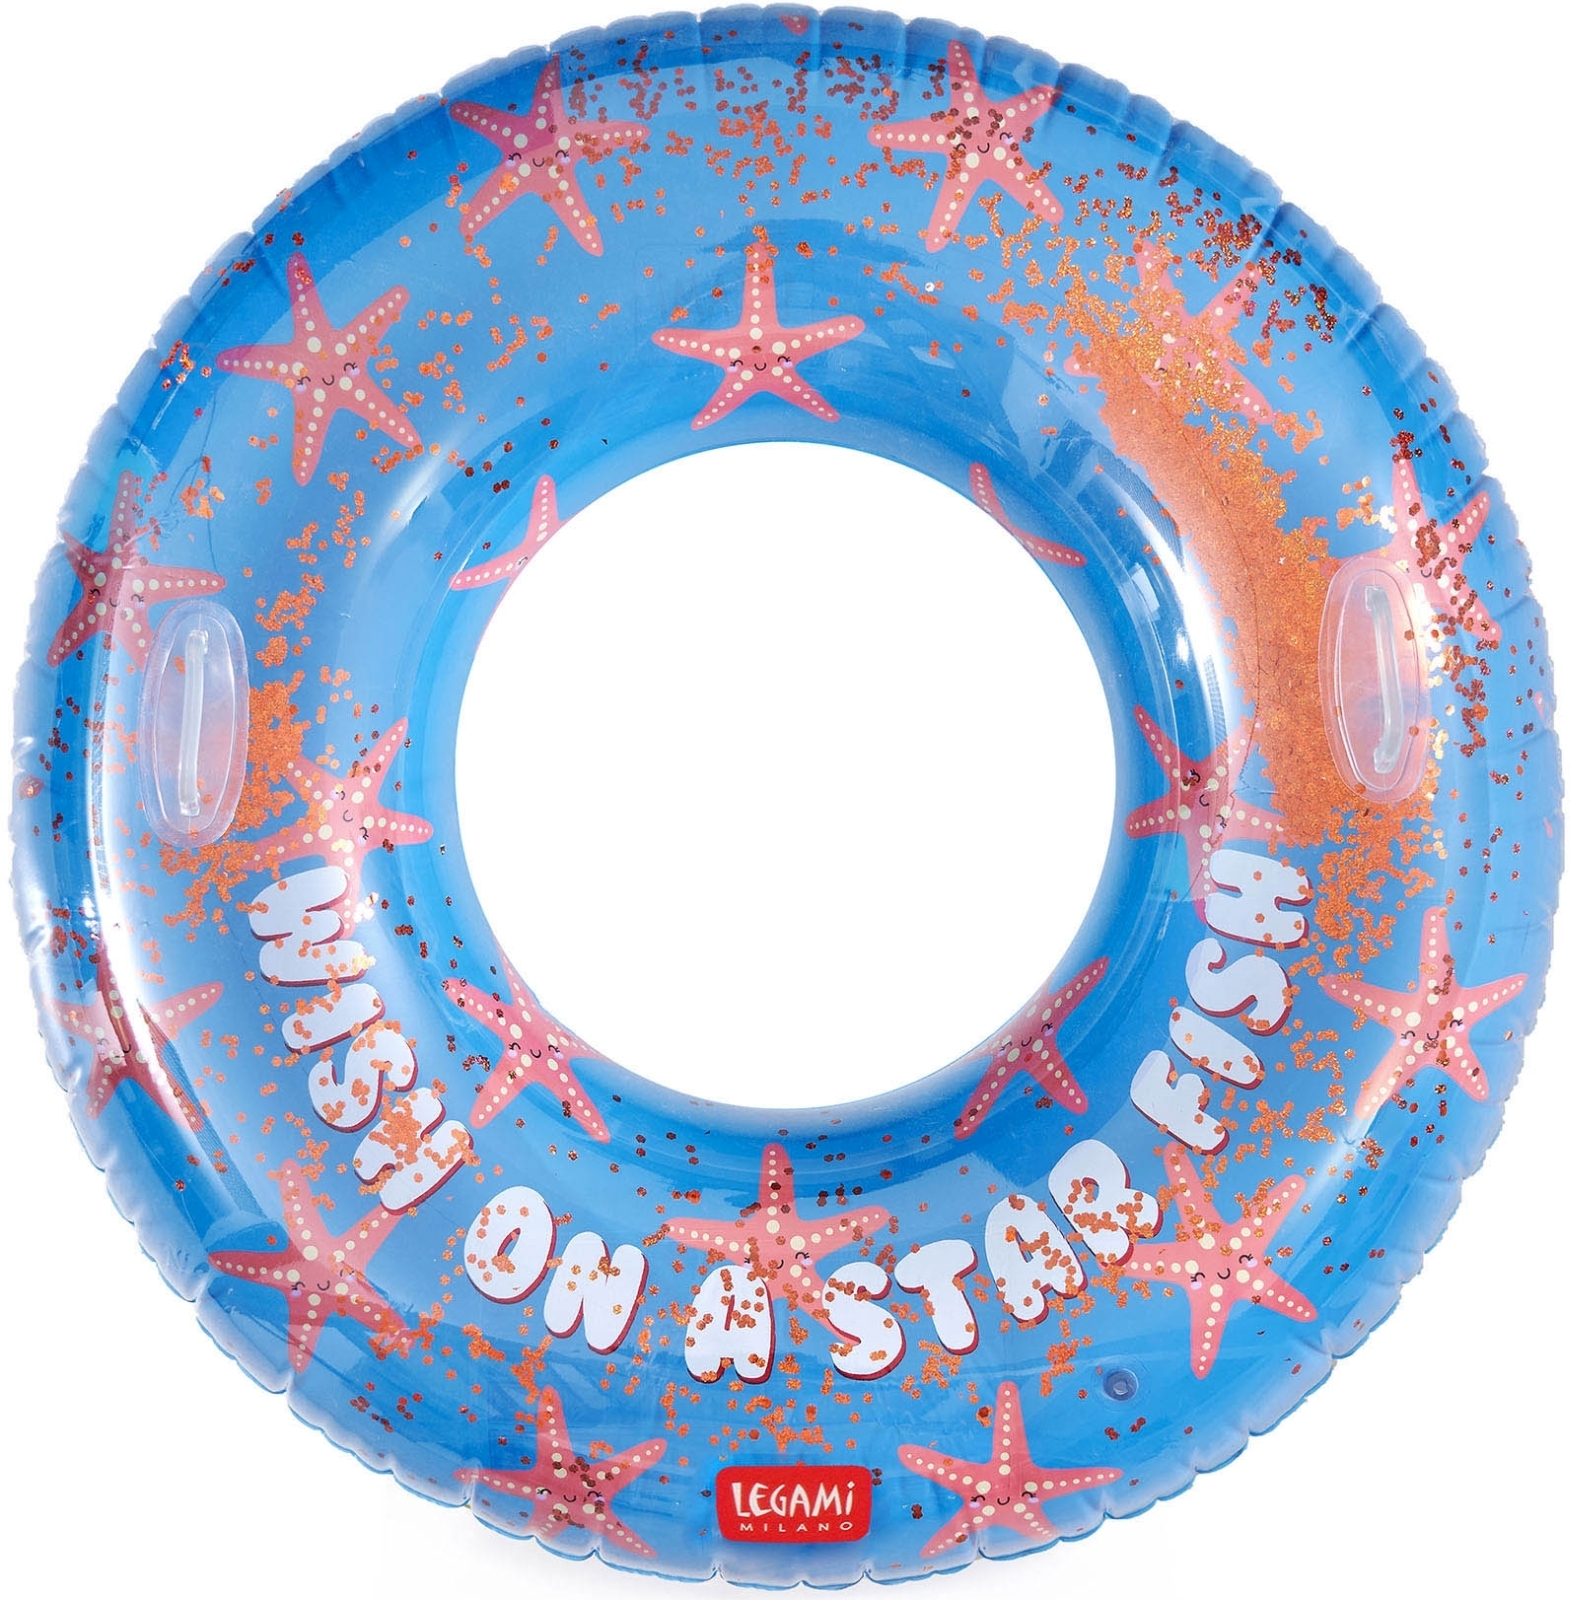 Legami Inflatable Maxi Pool Ring - Maxi Pool Ring - Starfish